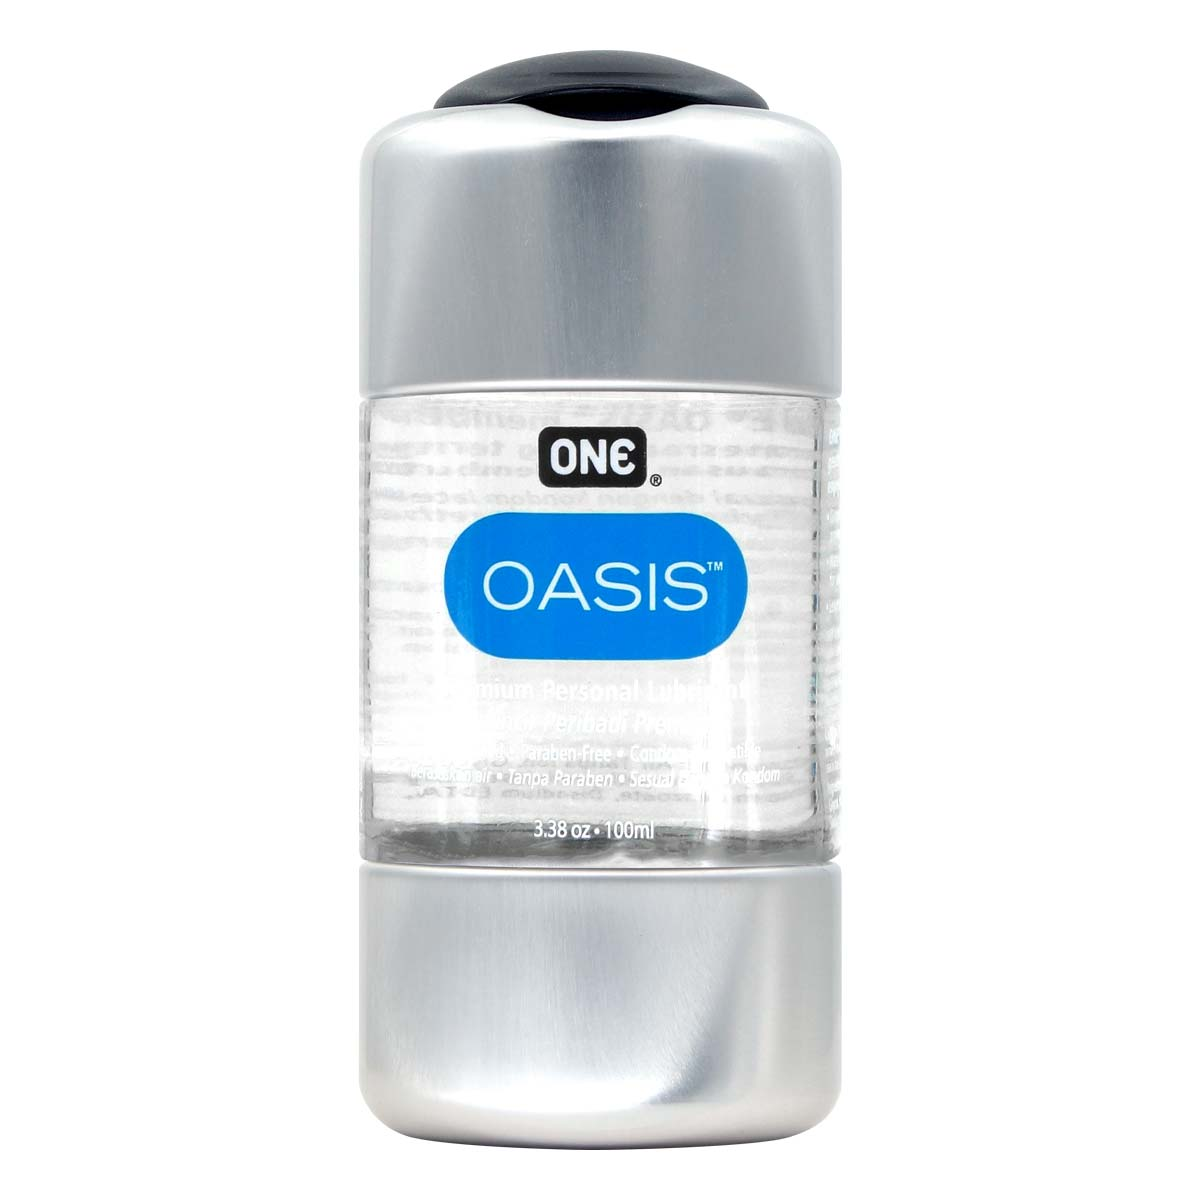 Oasis® Lube 3.38oz (100ml)